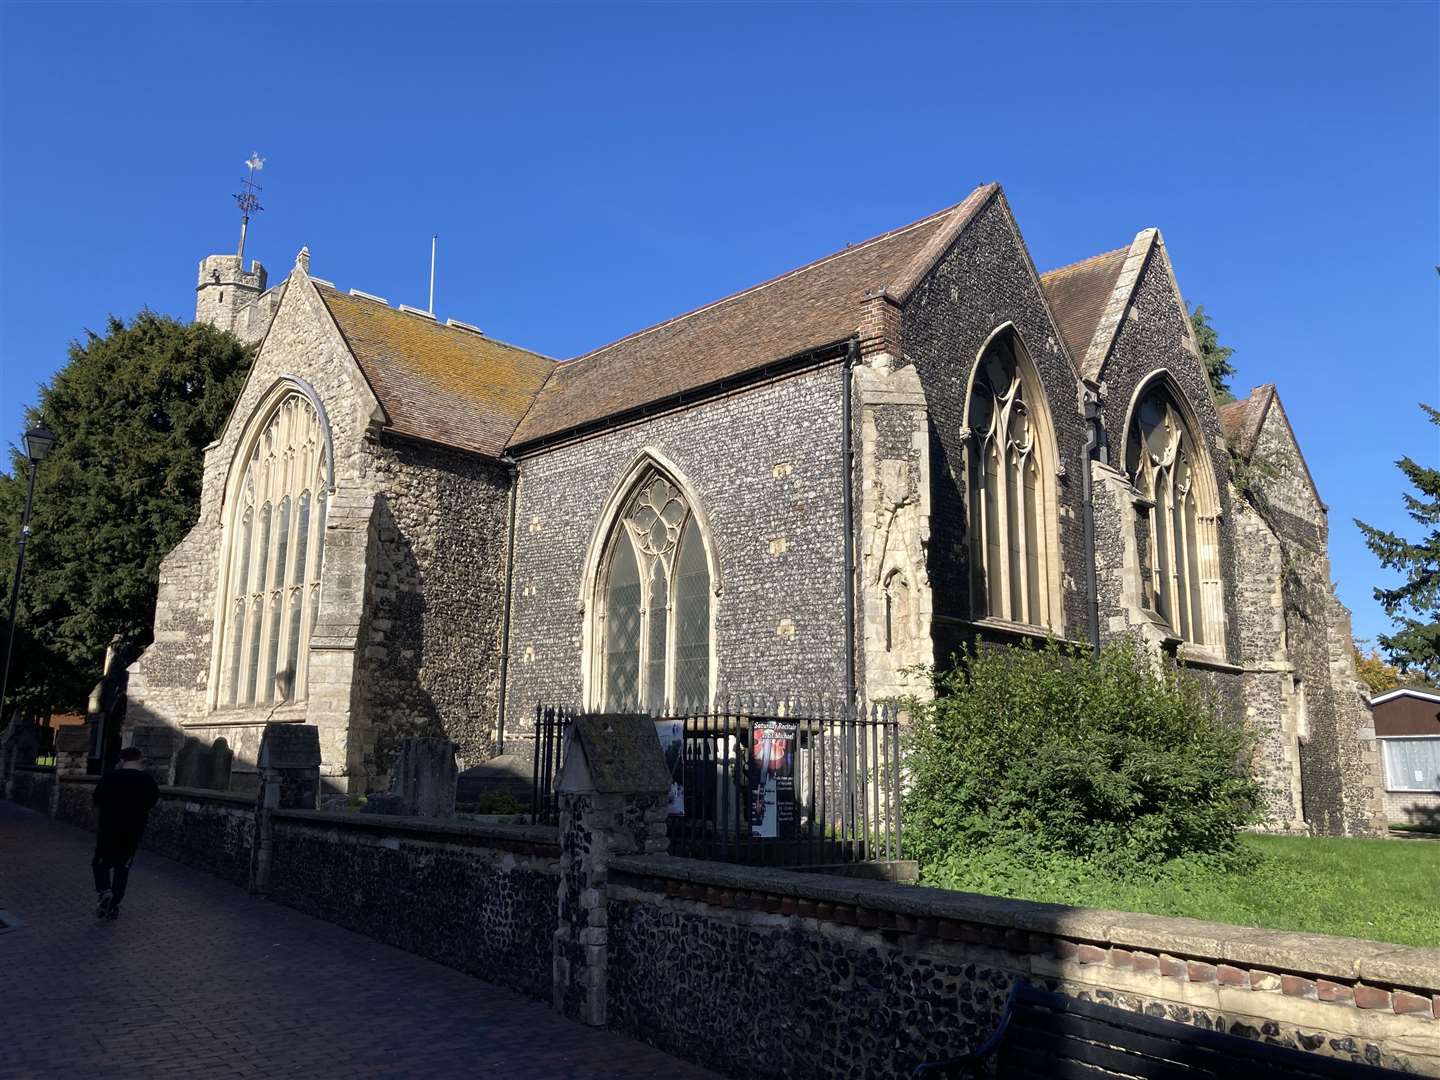 St Michael's church in Sittingbourne High Street